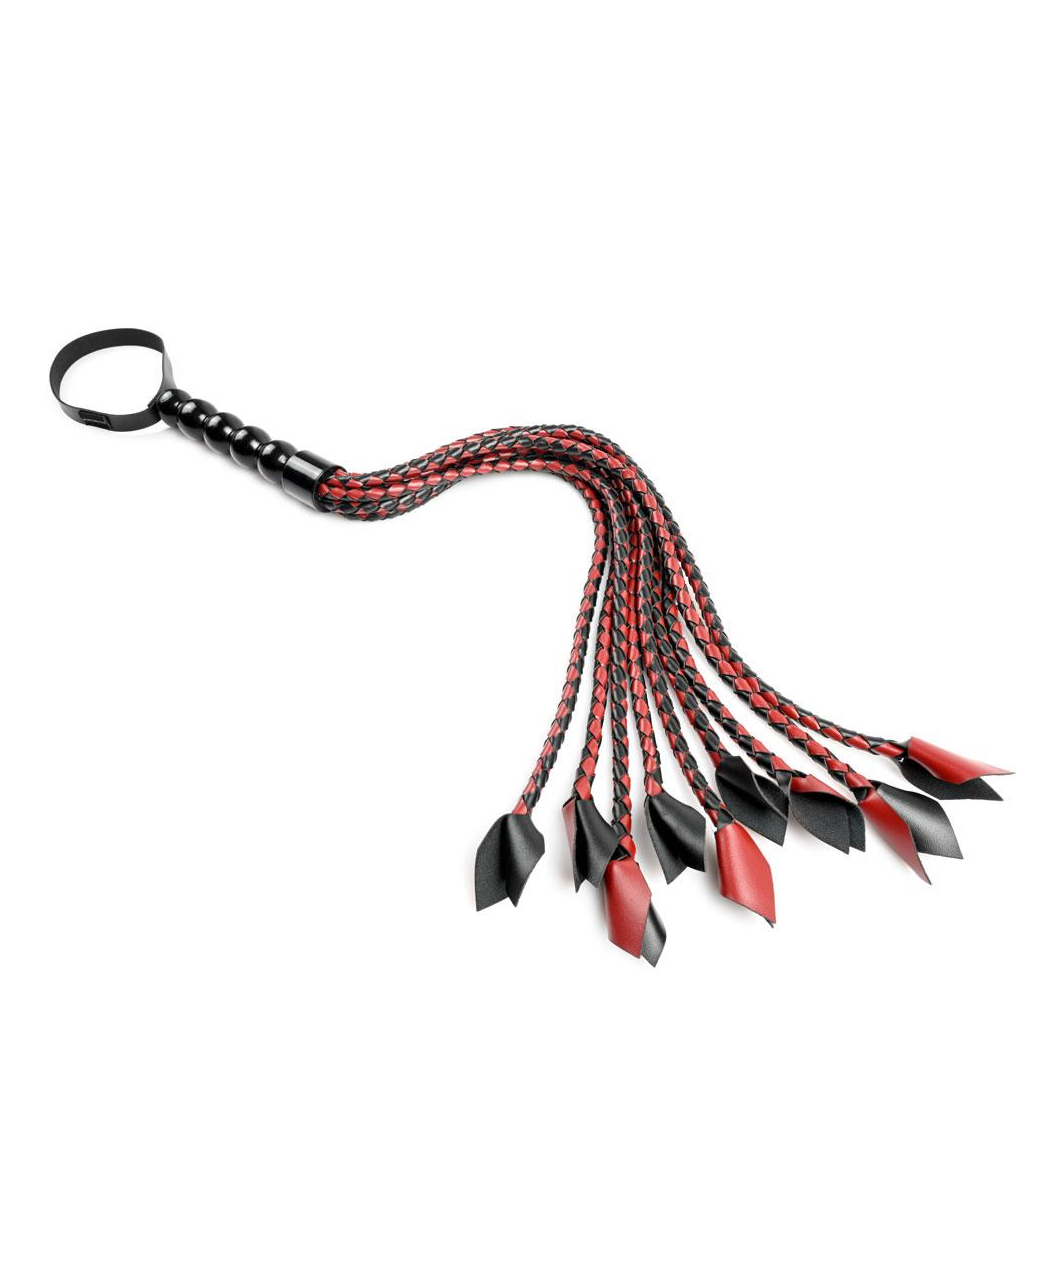 Sportsheets Saffron red & black braided faux leather flogger